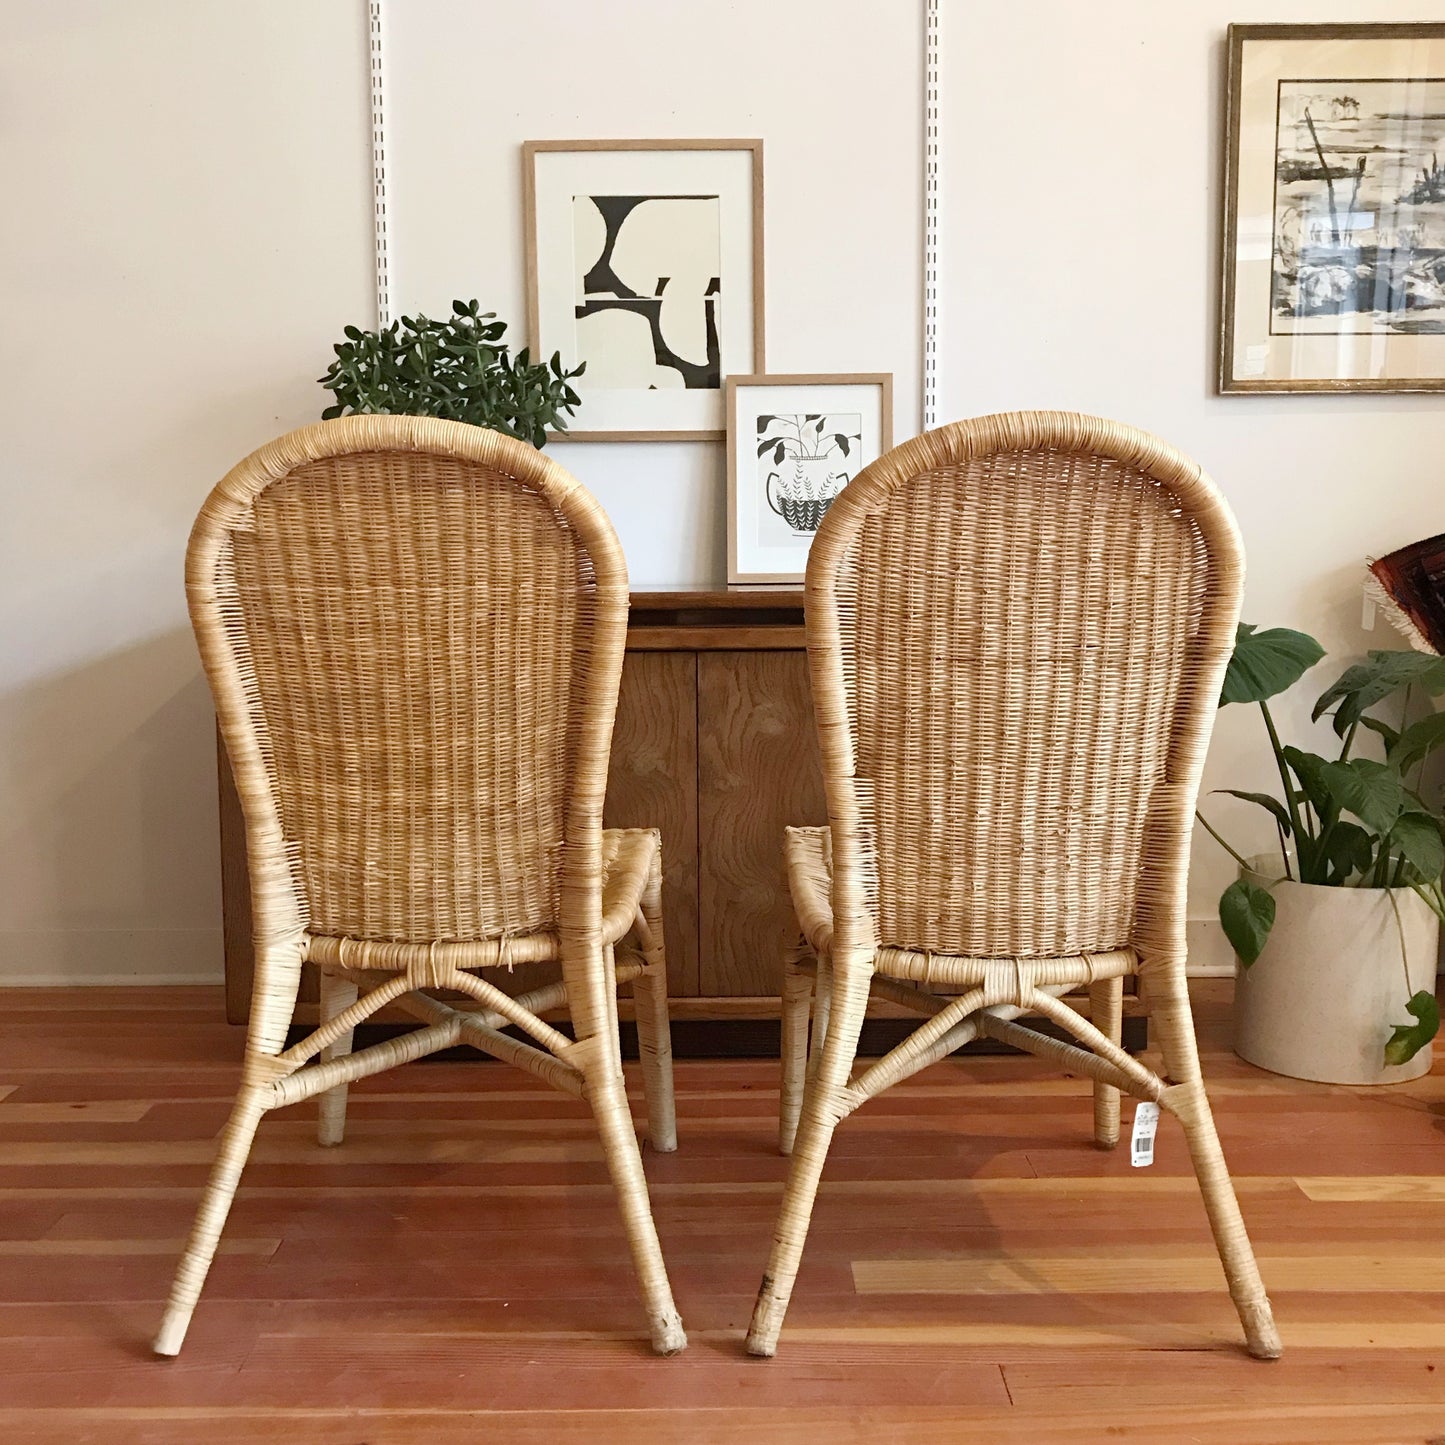 PAIR: Vintage Wicker Chairs